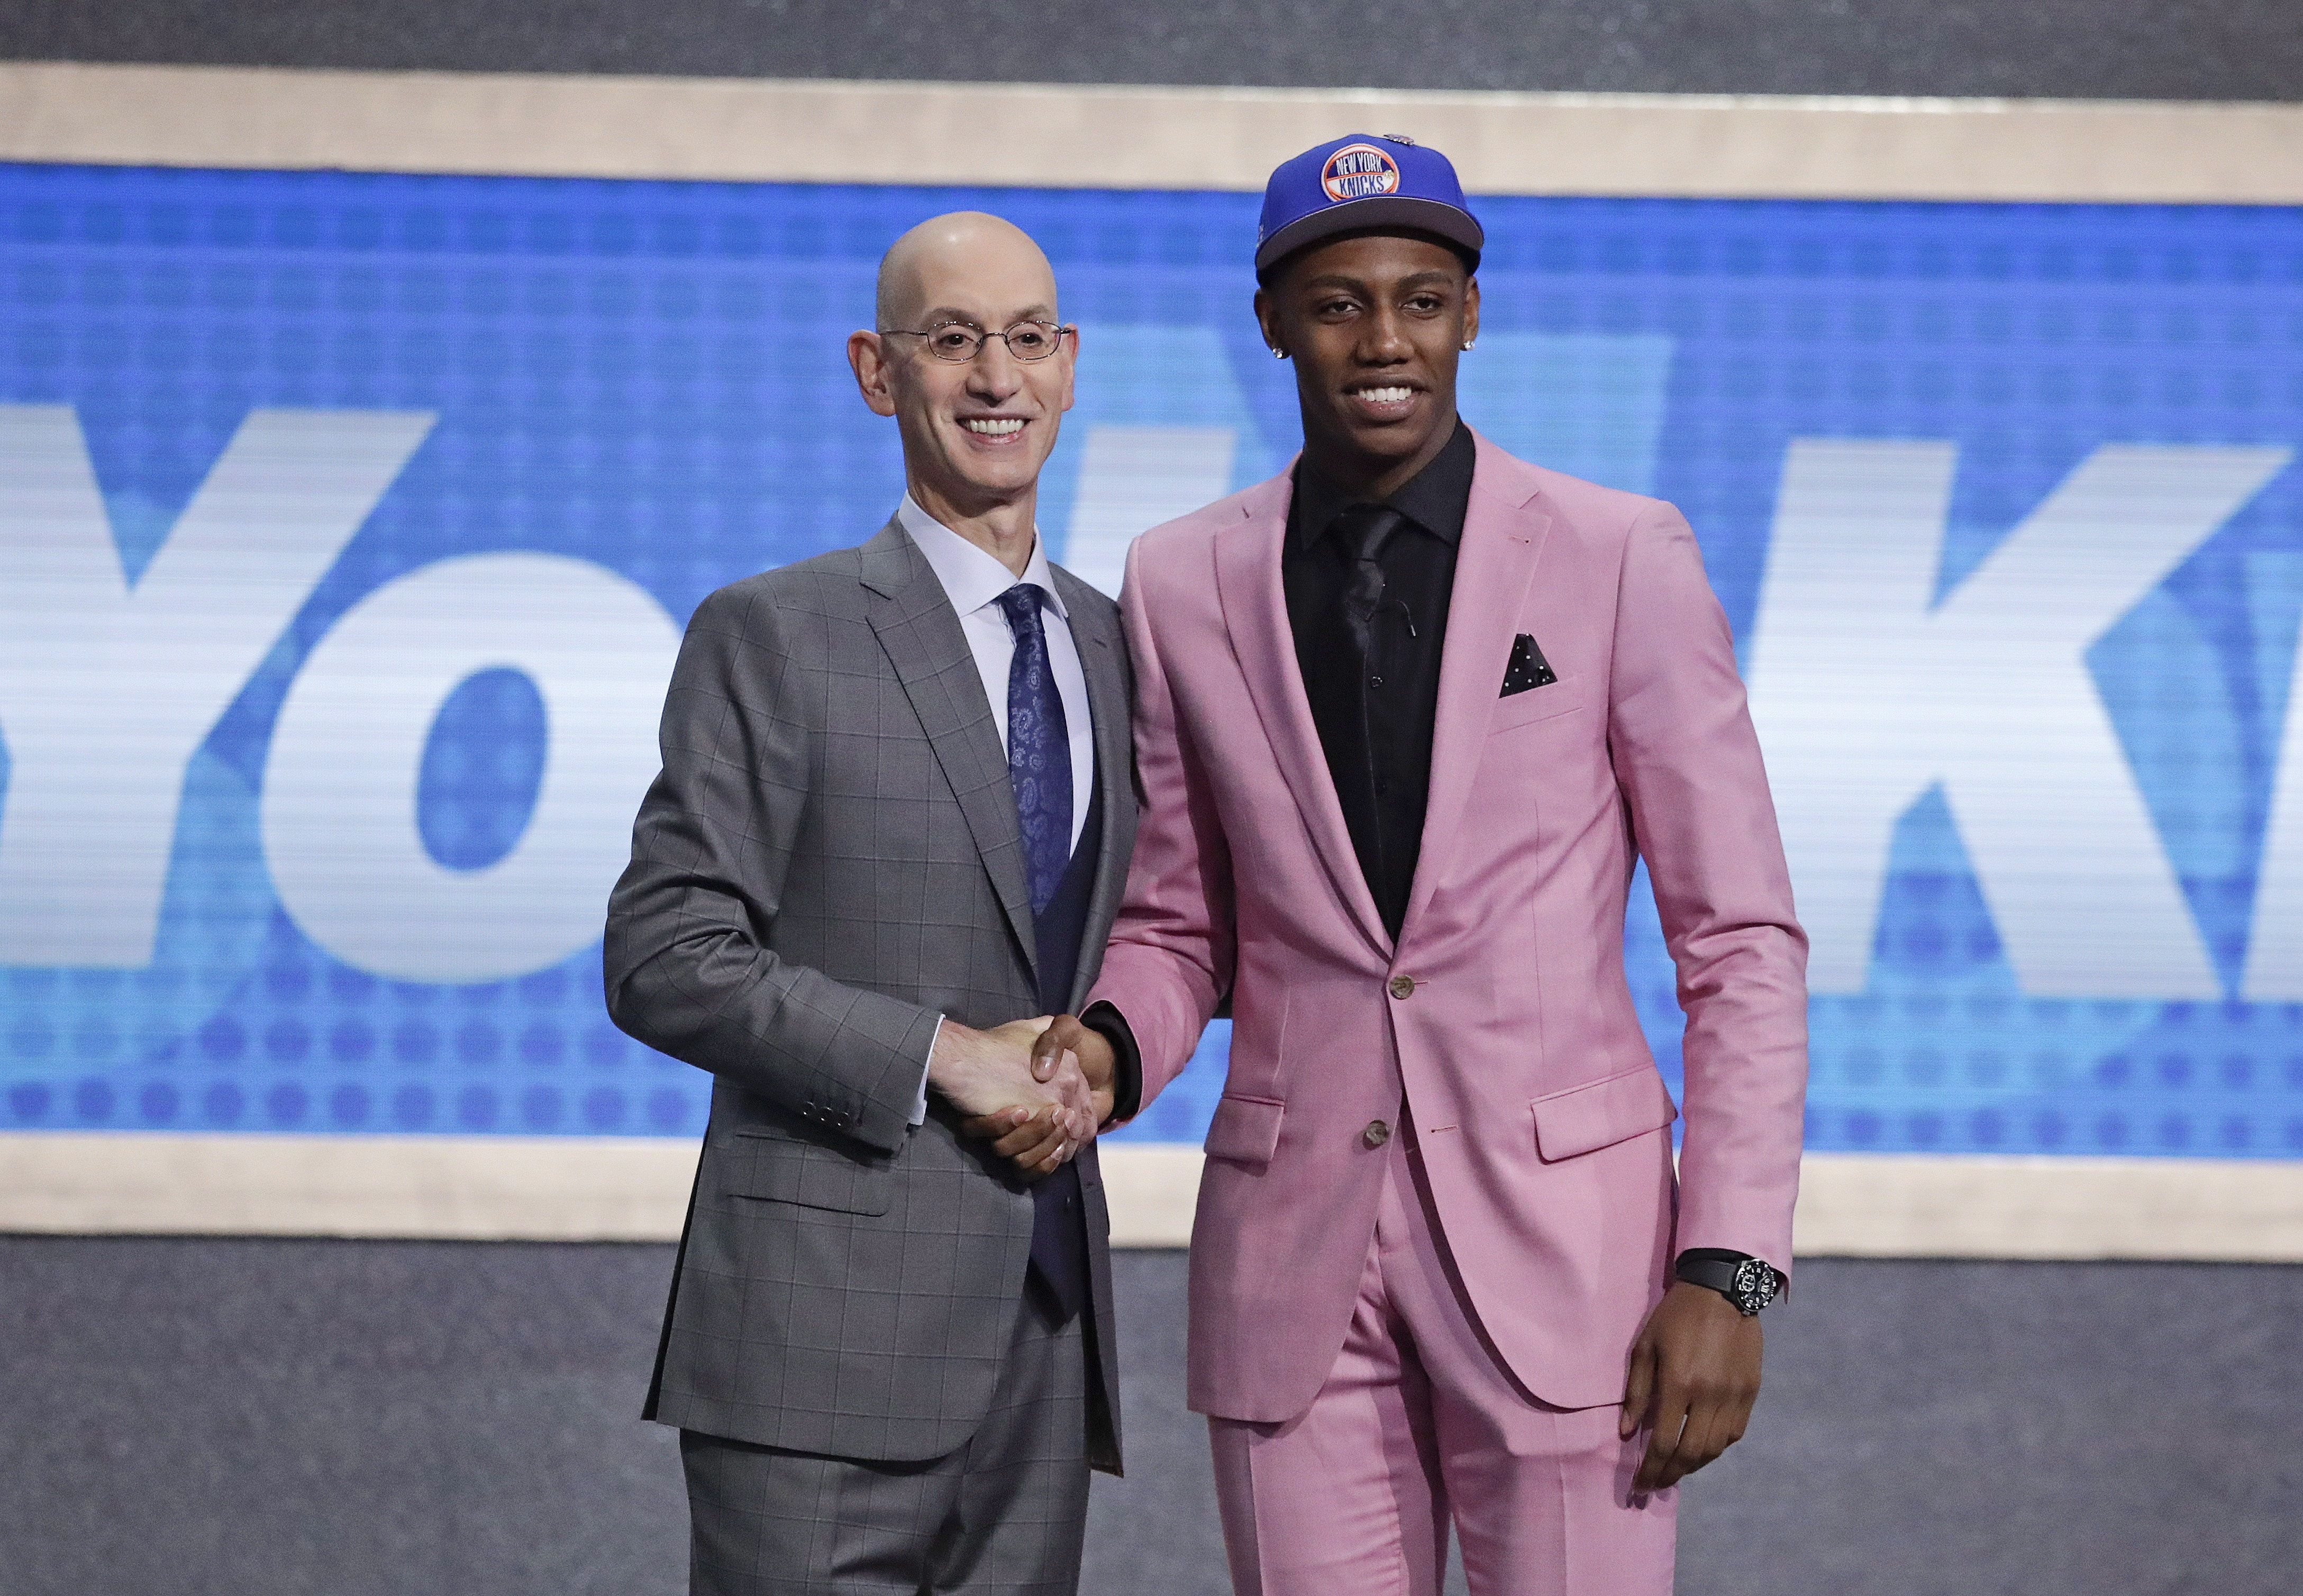 Knicks will still impact tonight's NBA Draft